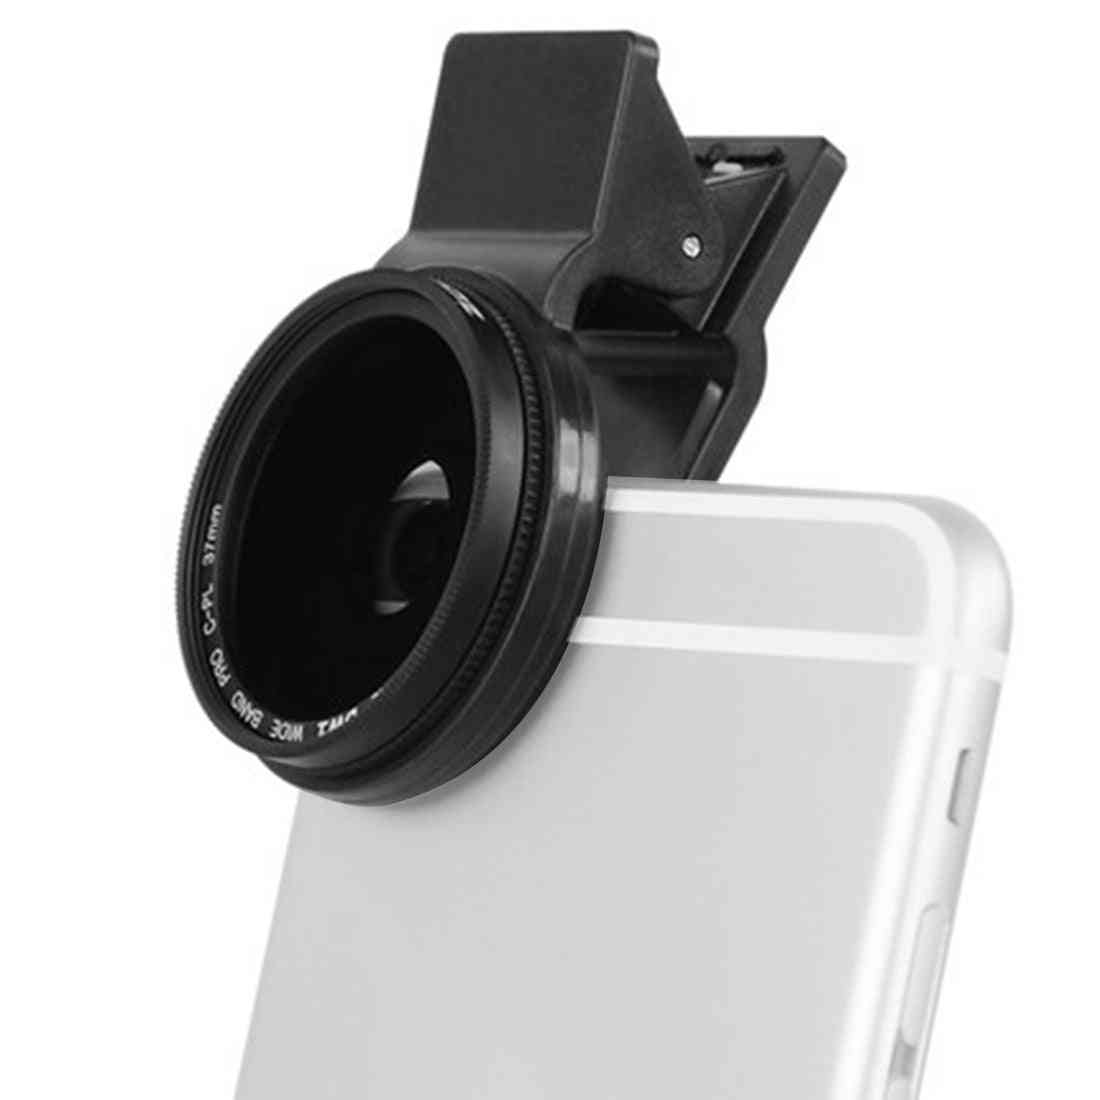 Profesional camera-telefon circular-polarizator cpl-obiectiv pentru iphone 7 6s plus samsung galaxy huawei htc windows android